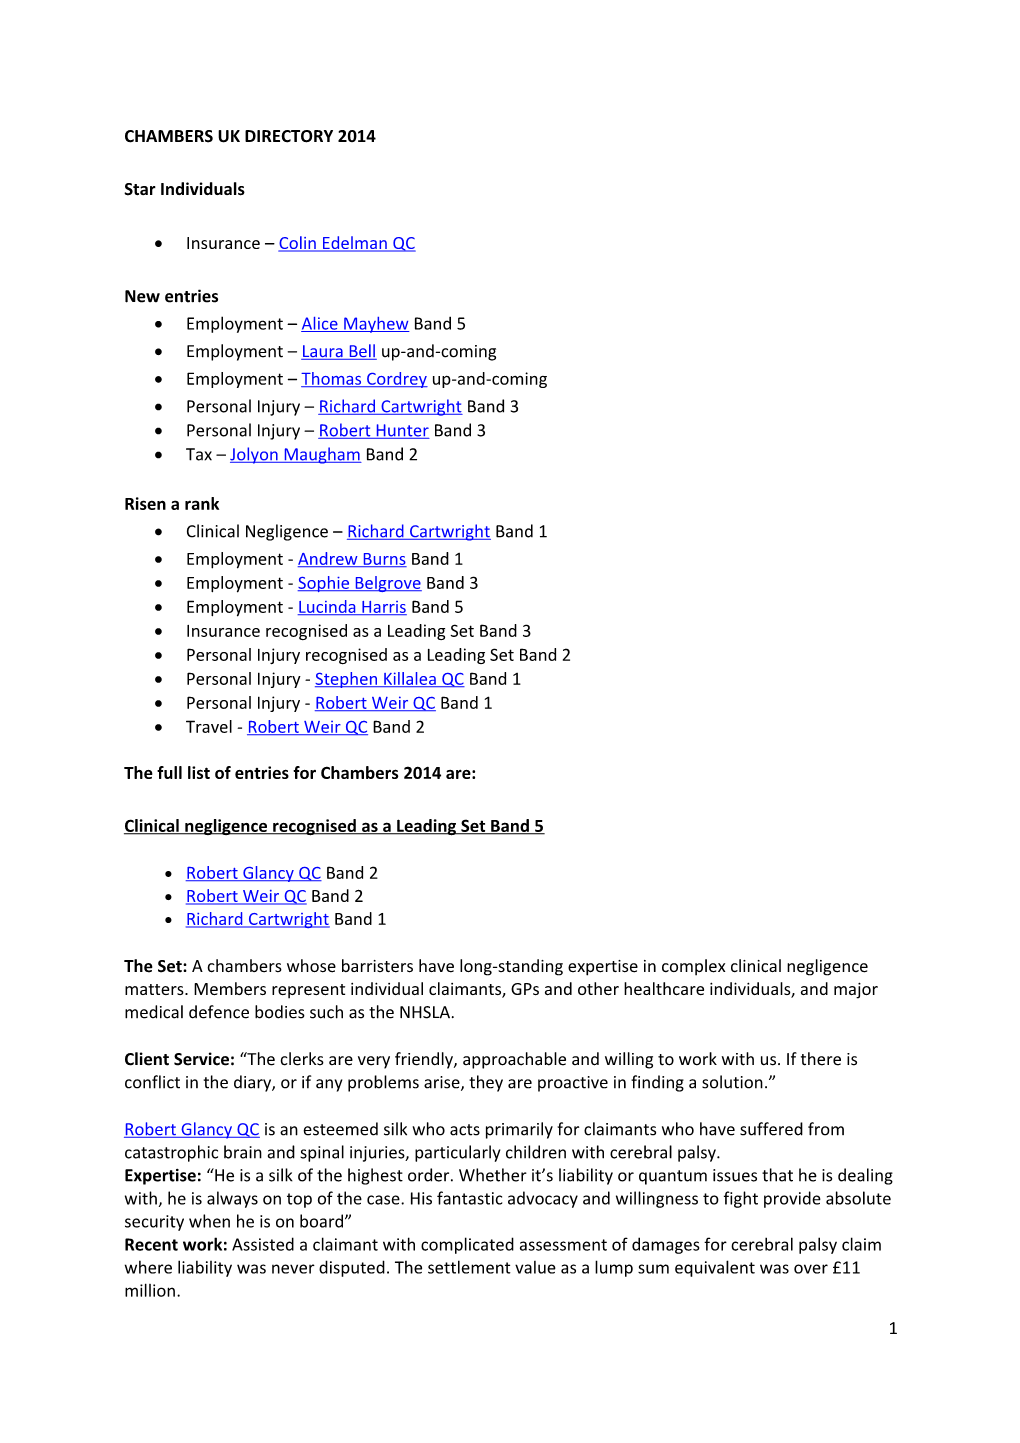 Chambers Uk Directory 2014